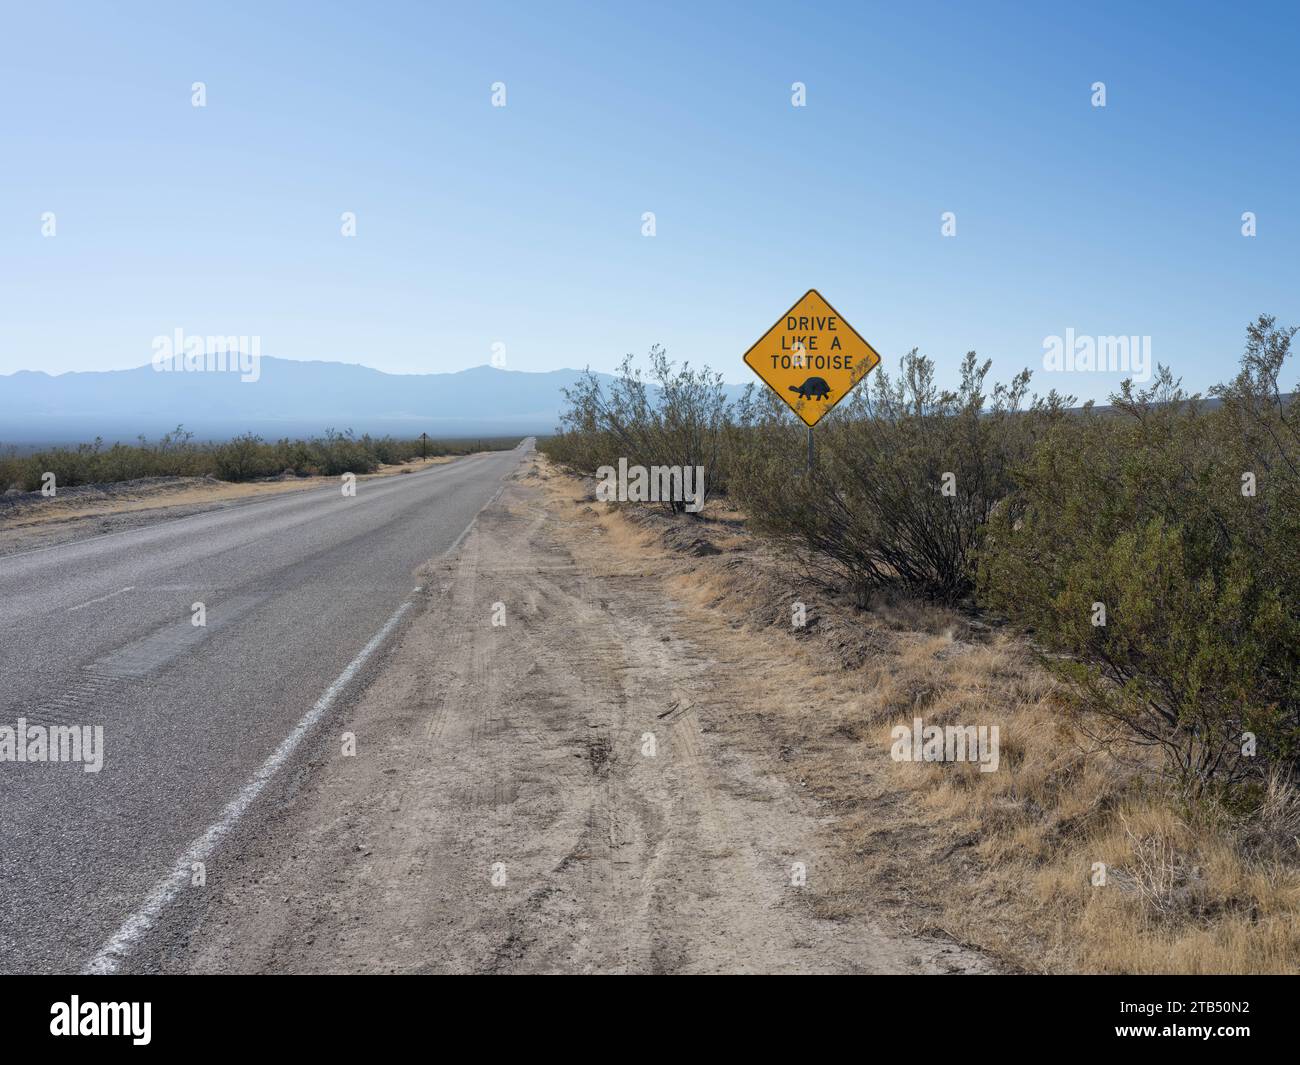 Drive Like A Tortoise, Road Sign, Mojave National Preserve, California Stock Photo